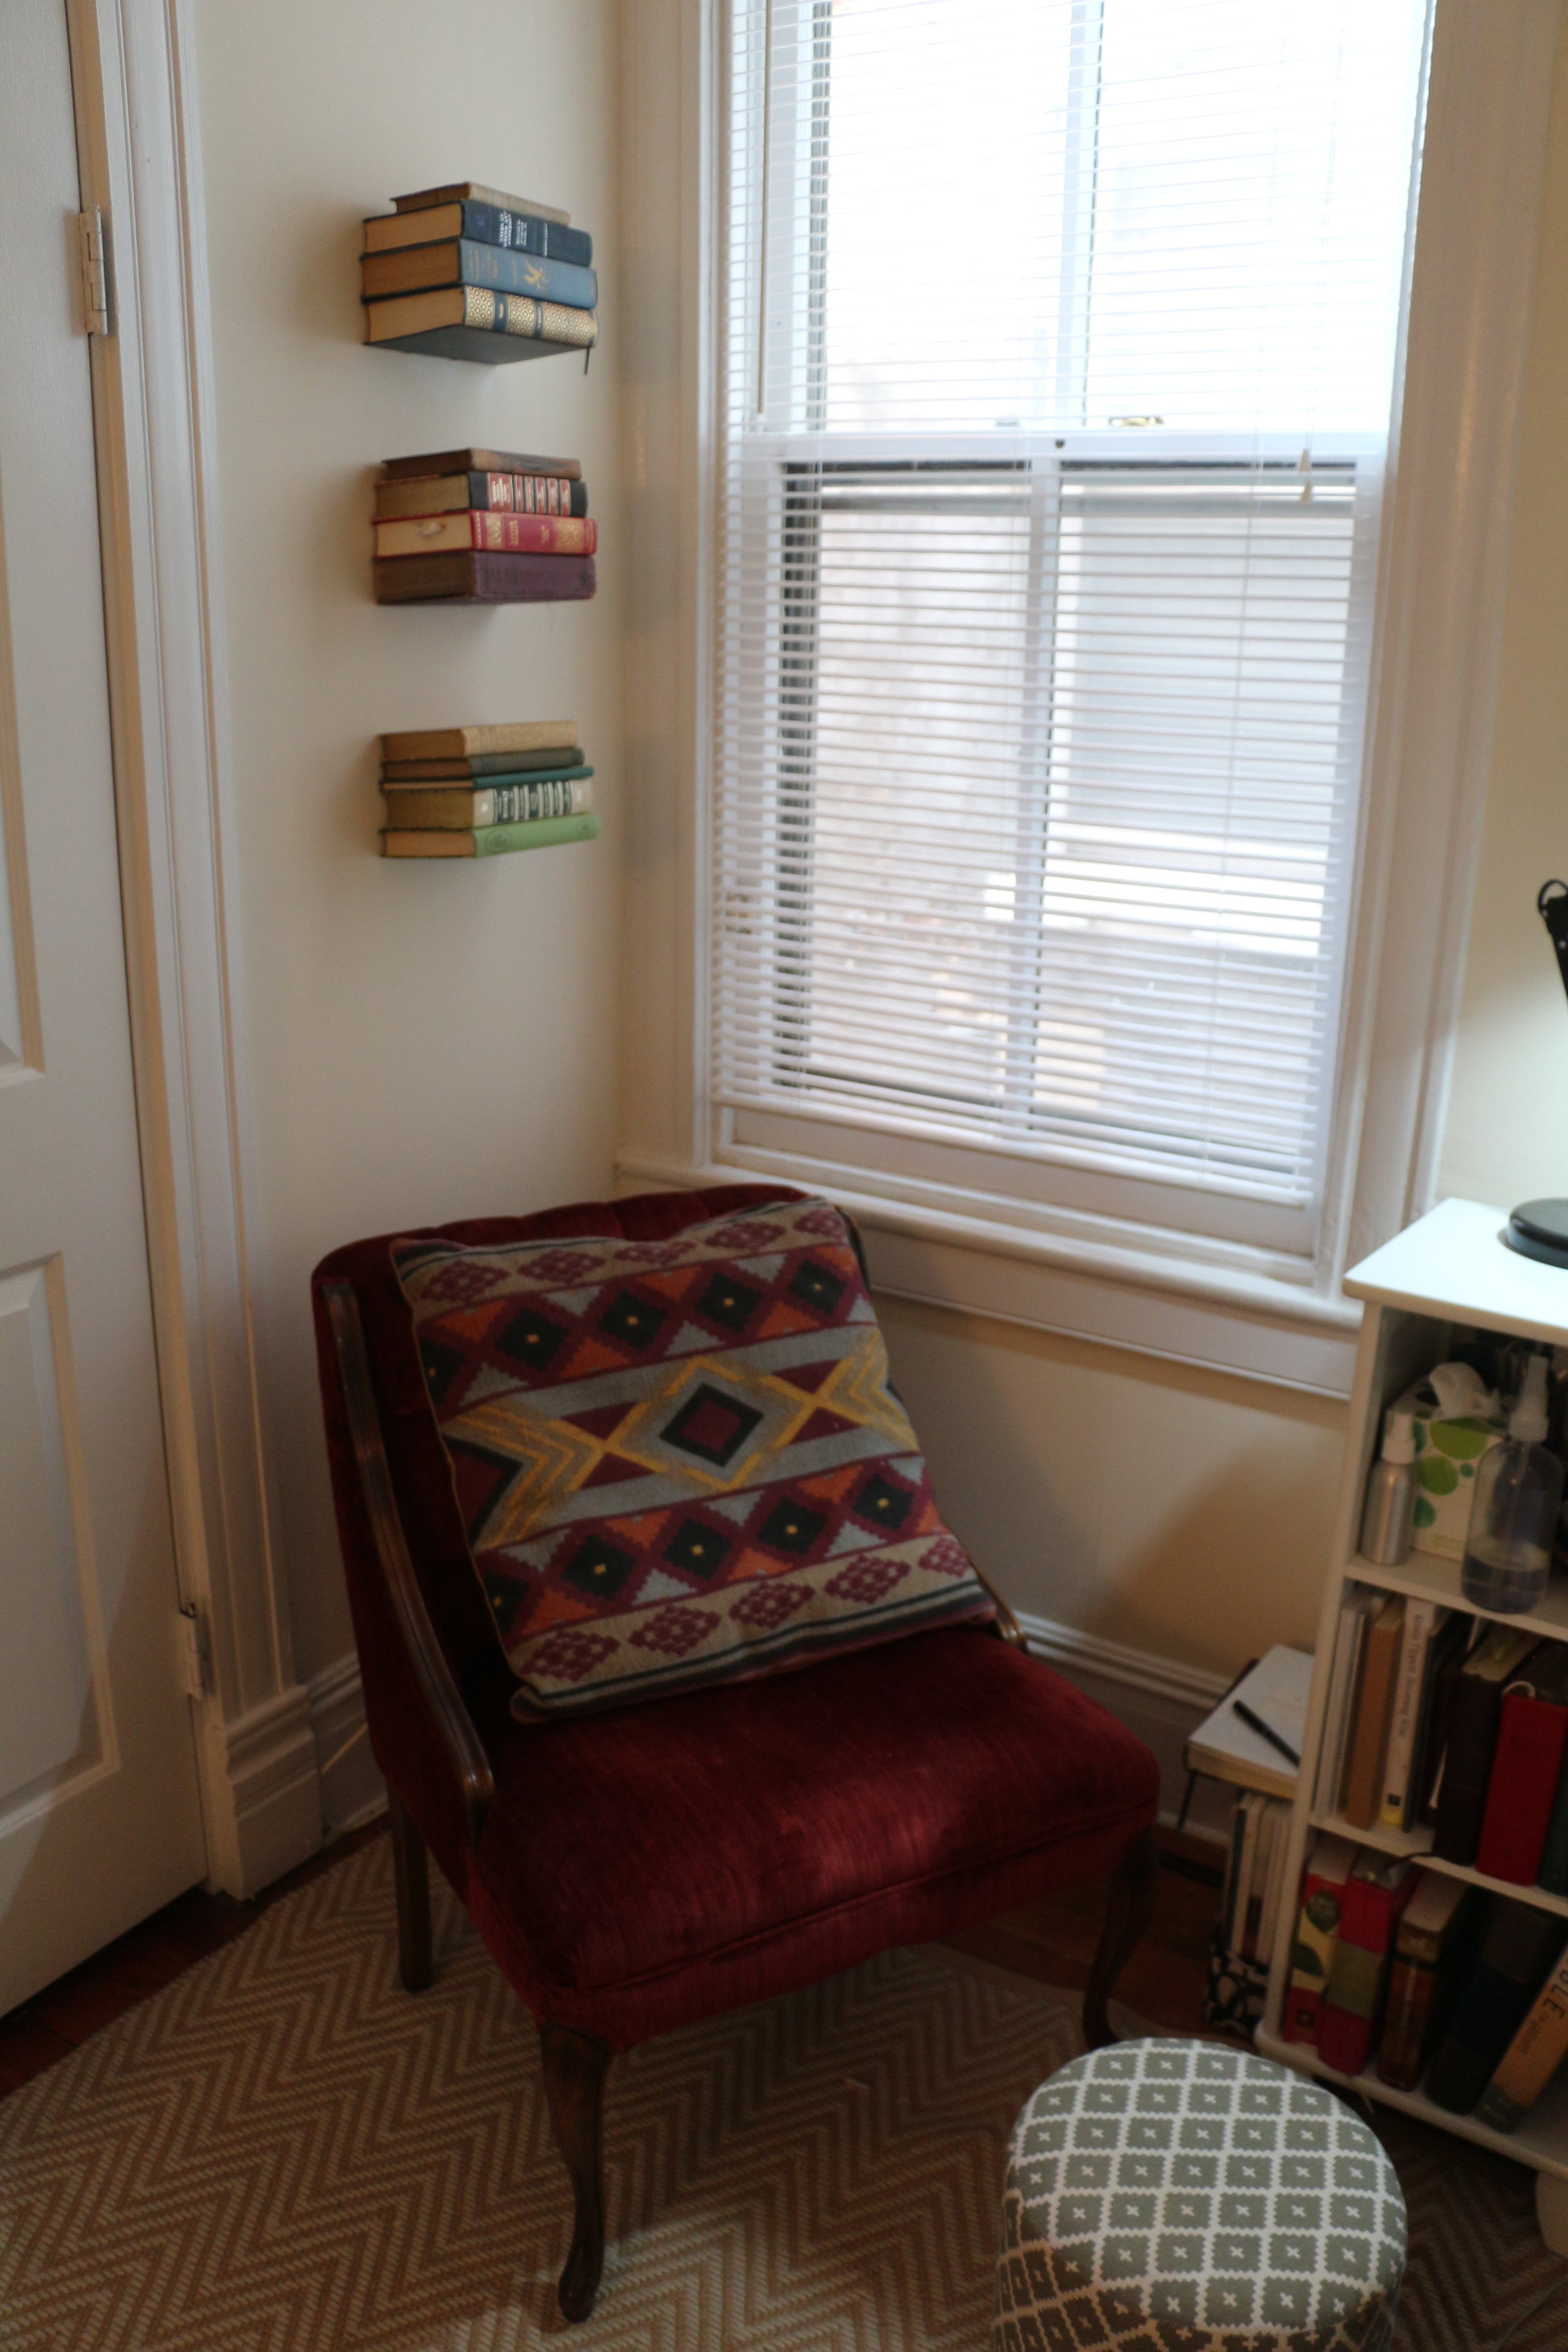 My cozy little reading corner